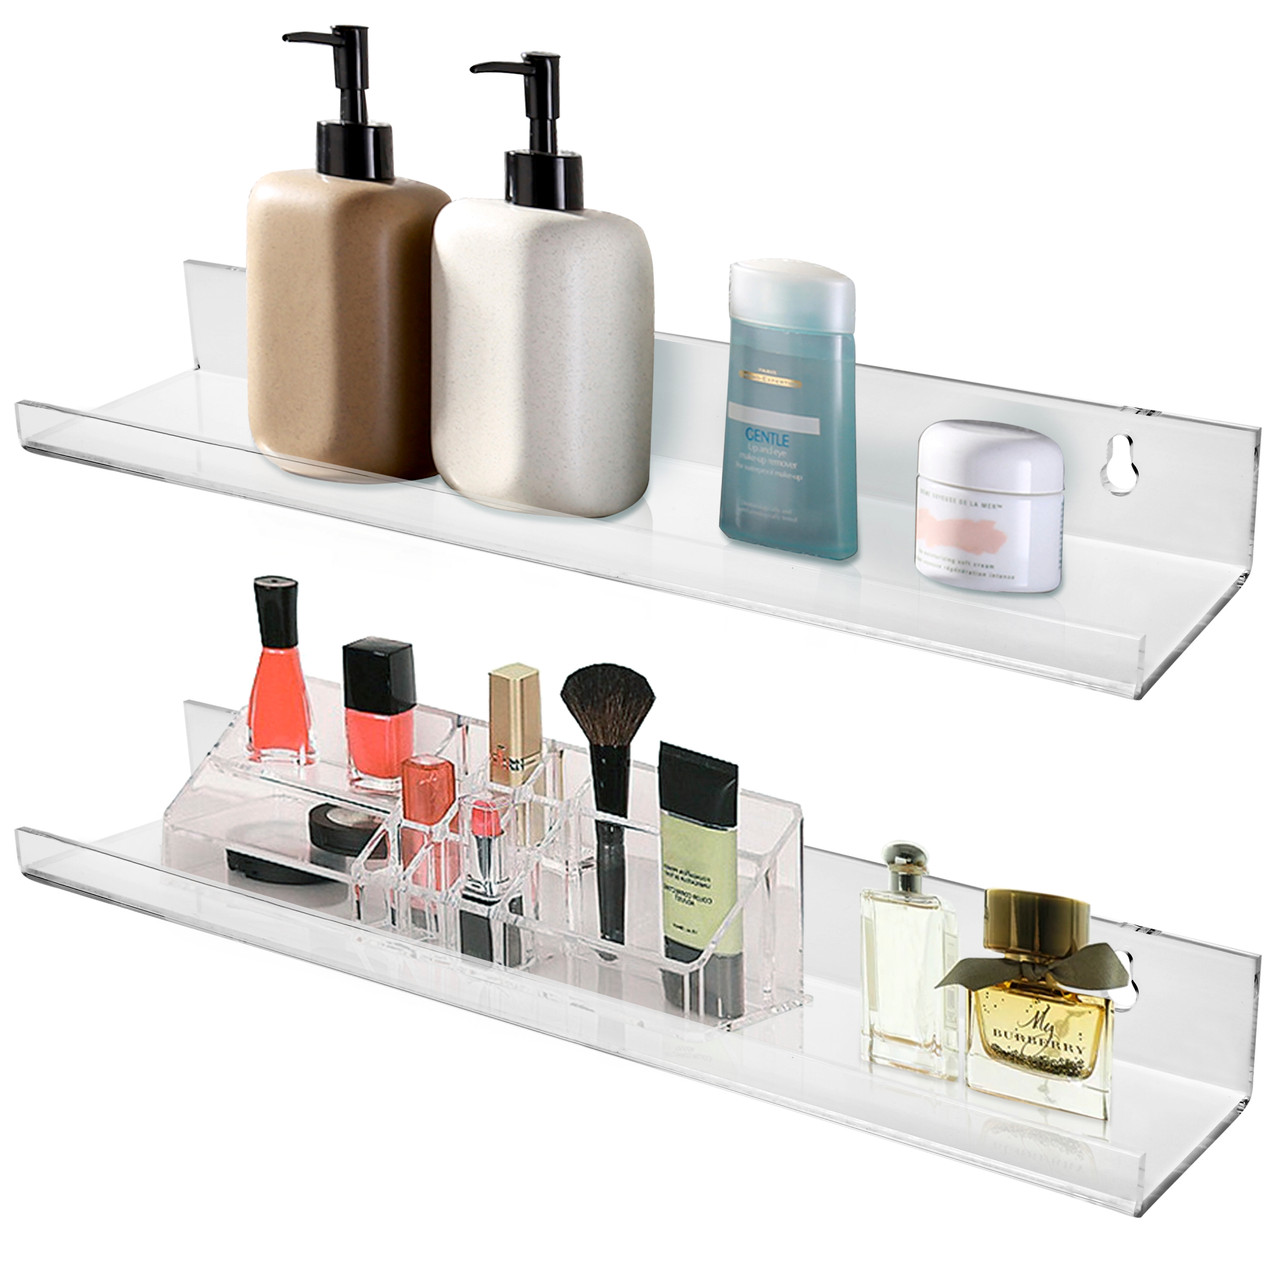 17 Clear Acrylic Floating Wall mounting Bathroom Shelf 2pack - My